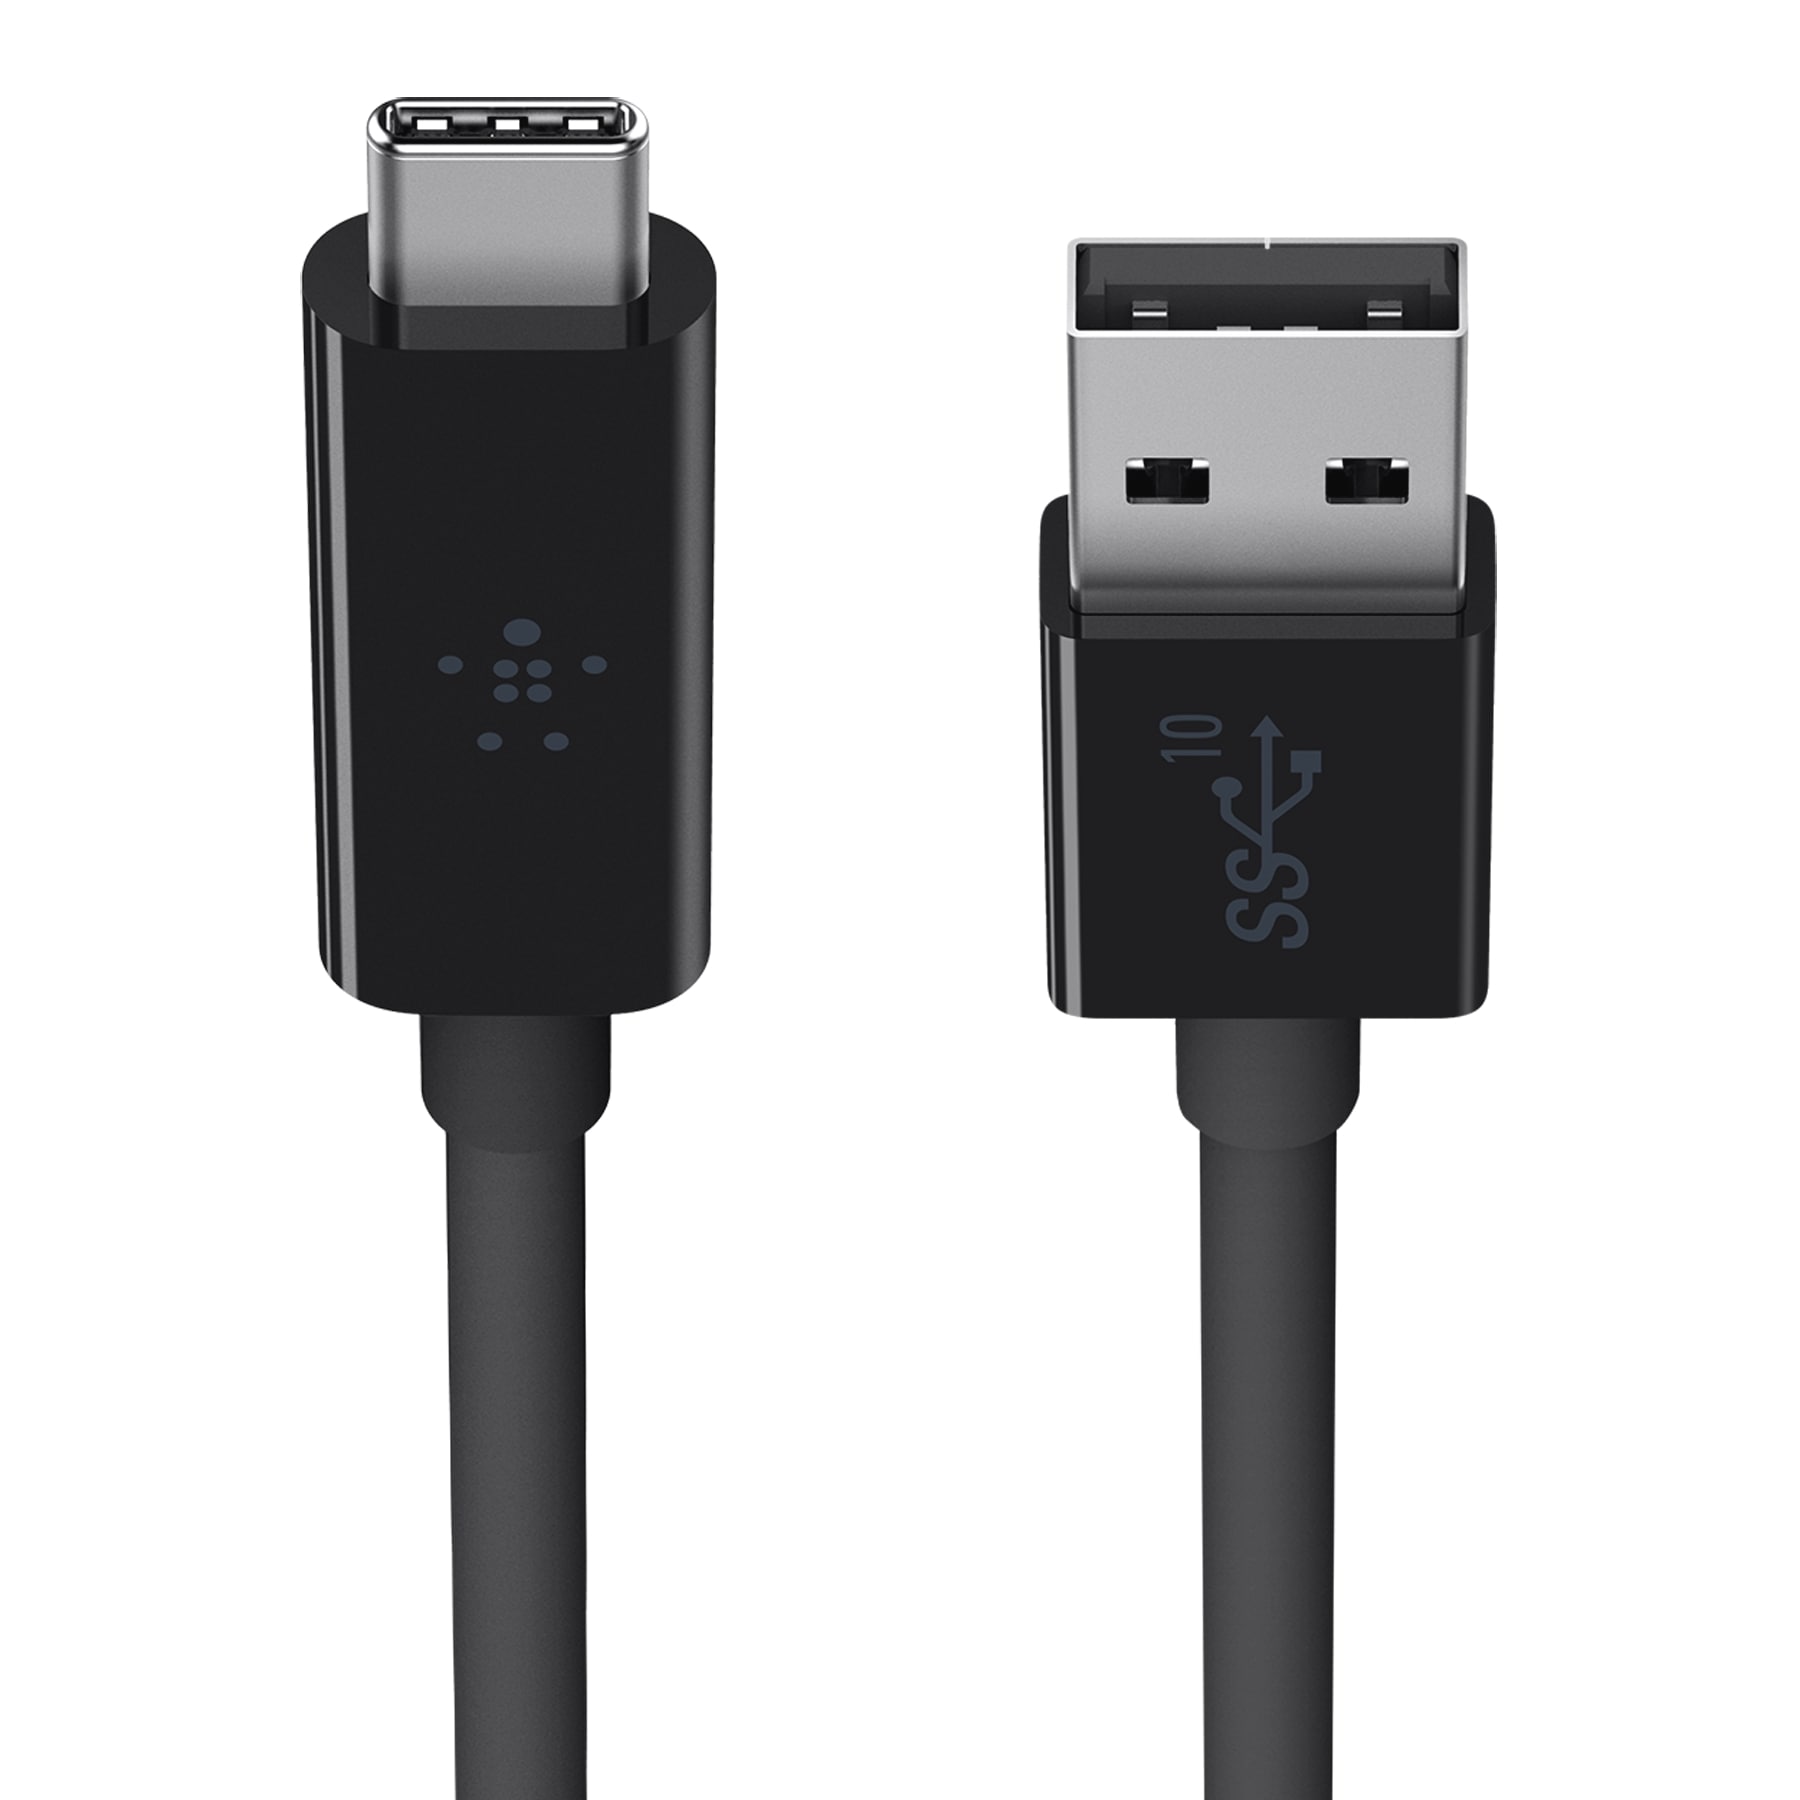 Belkin USB-Kabel »USB 3.1 SuperSpeed+ Kabel, USB-C auf USB-A, 1m«, USB Typ A-USB Typ C, 100 cm